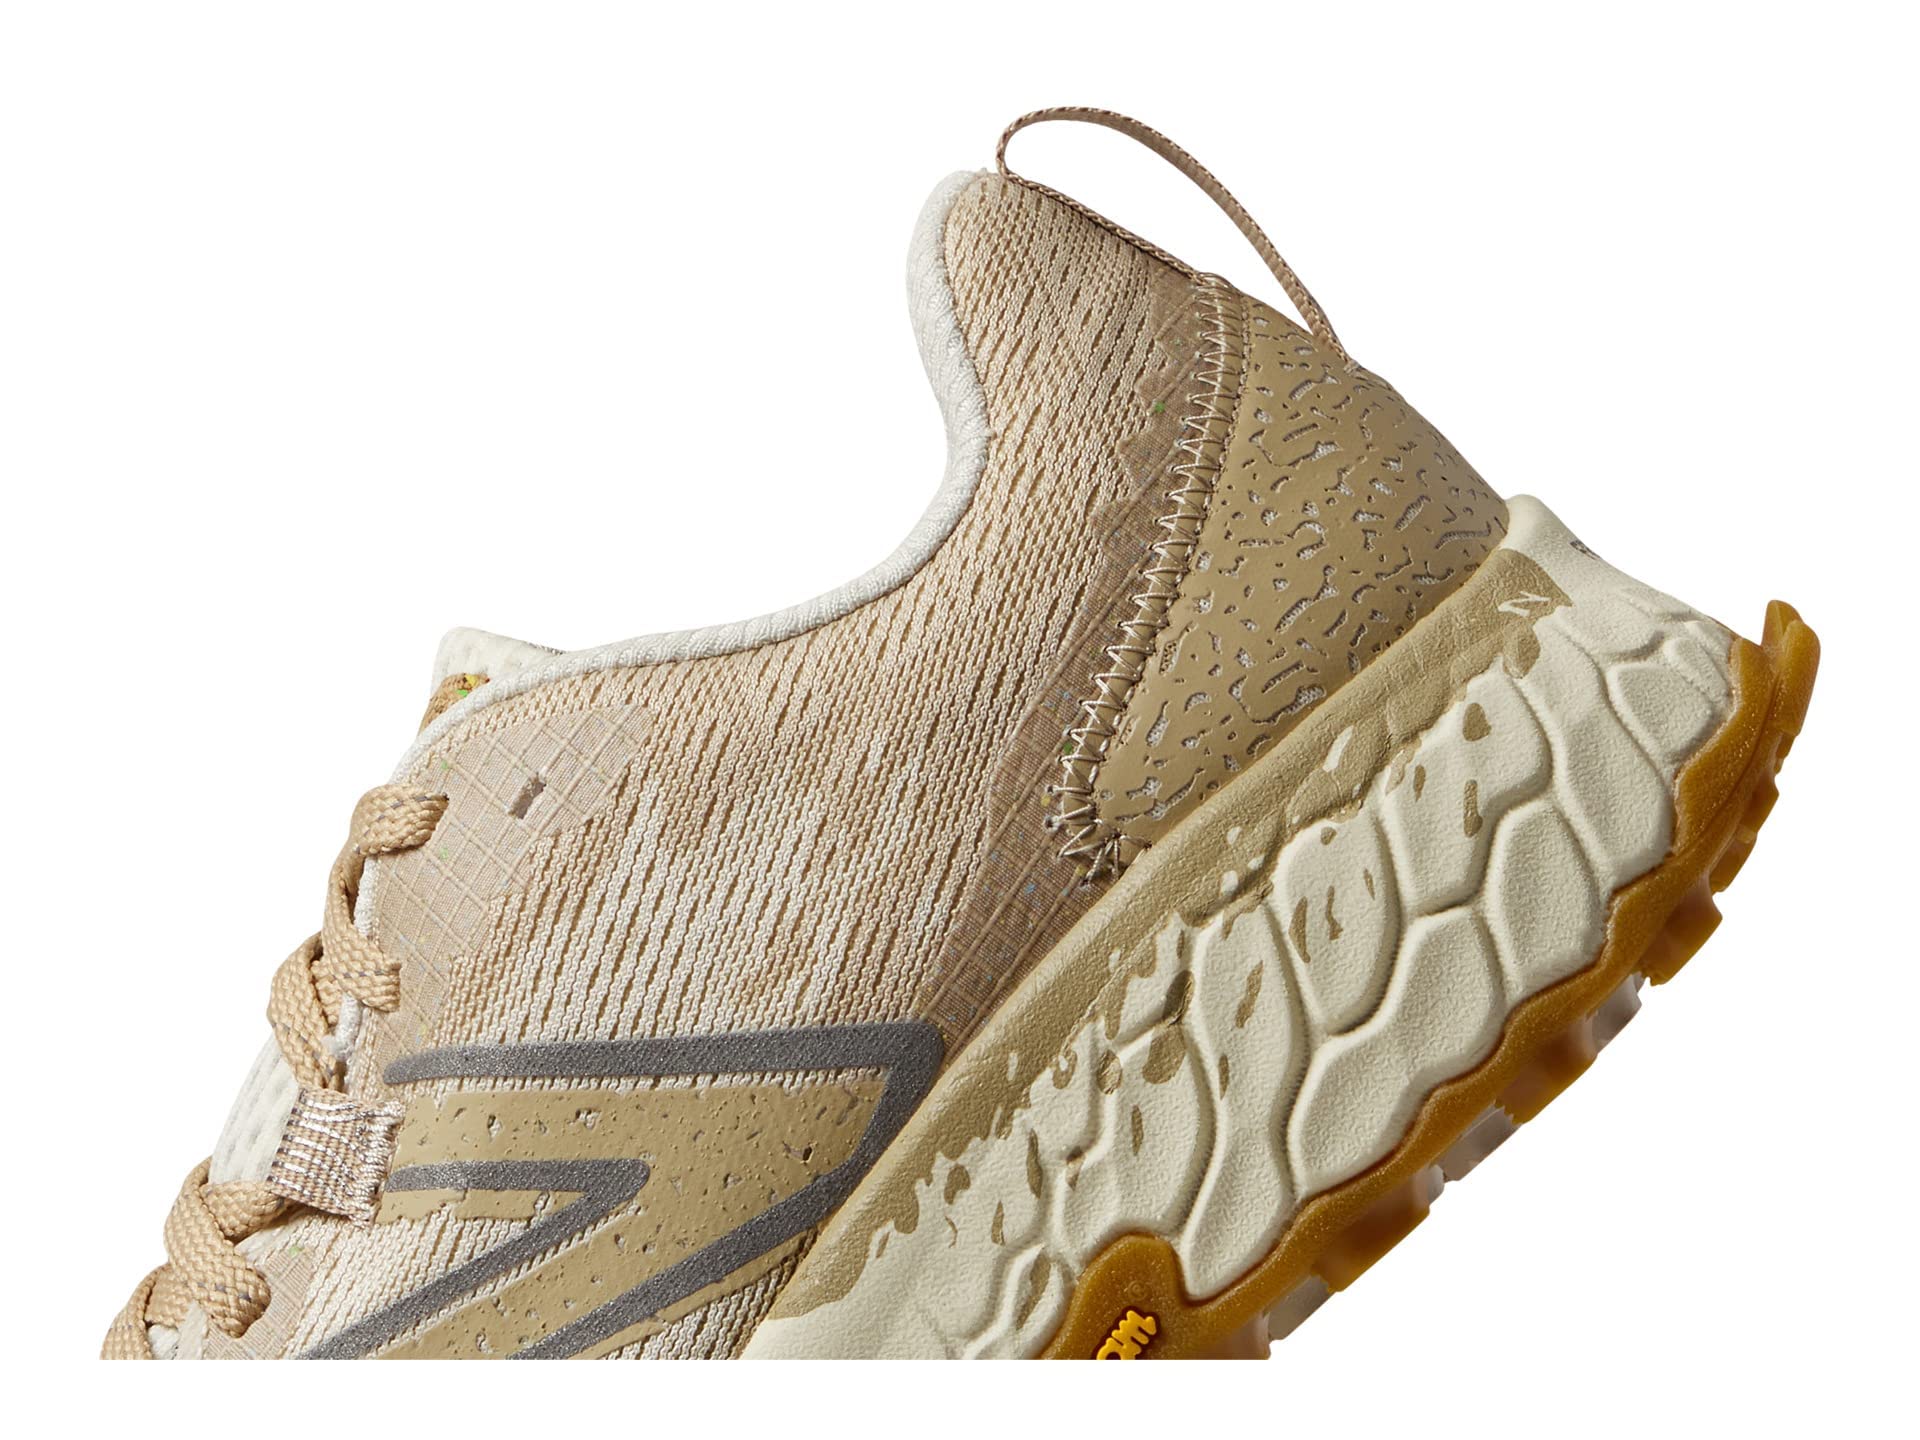 New Balance Men's Fresh Foam X Hierro V7 Trail Running Shoe